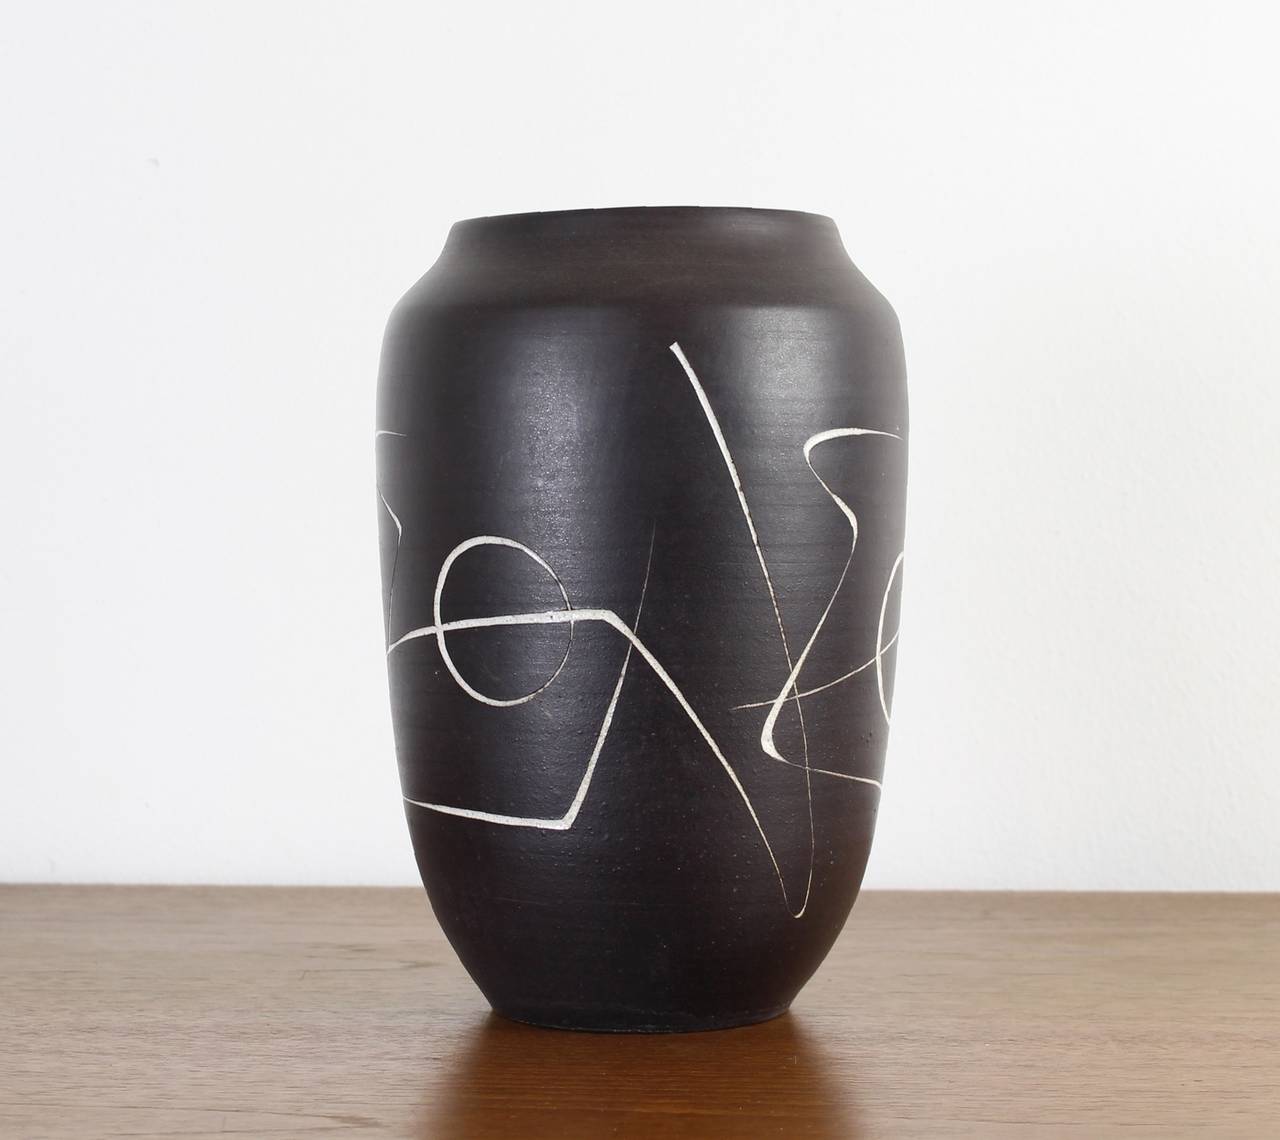 Beautiful abstract decorated vase
Artist: Meindert Zaalberg
Manufacter: Zaalberg Holland
Black glazed pottery vase